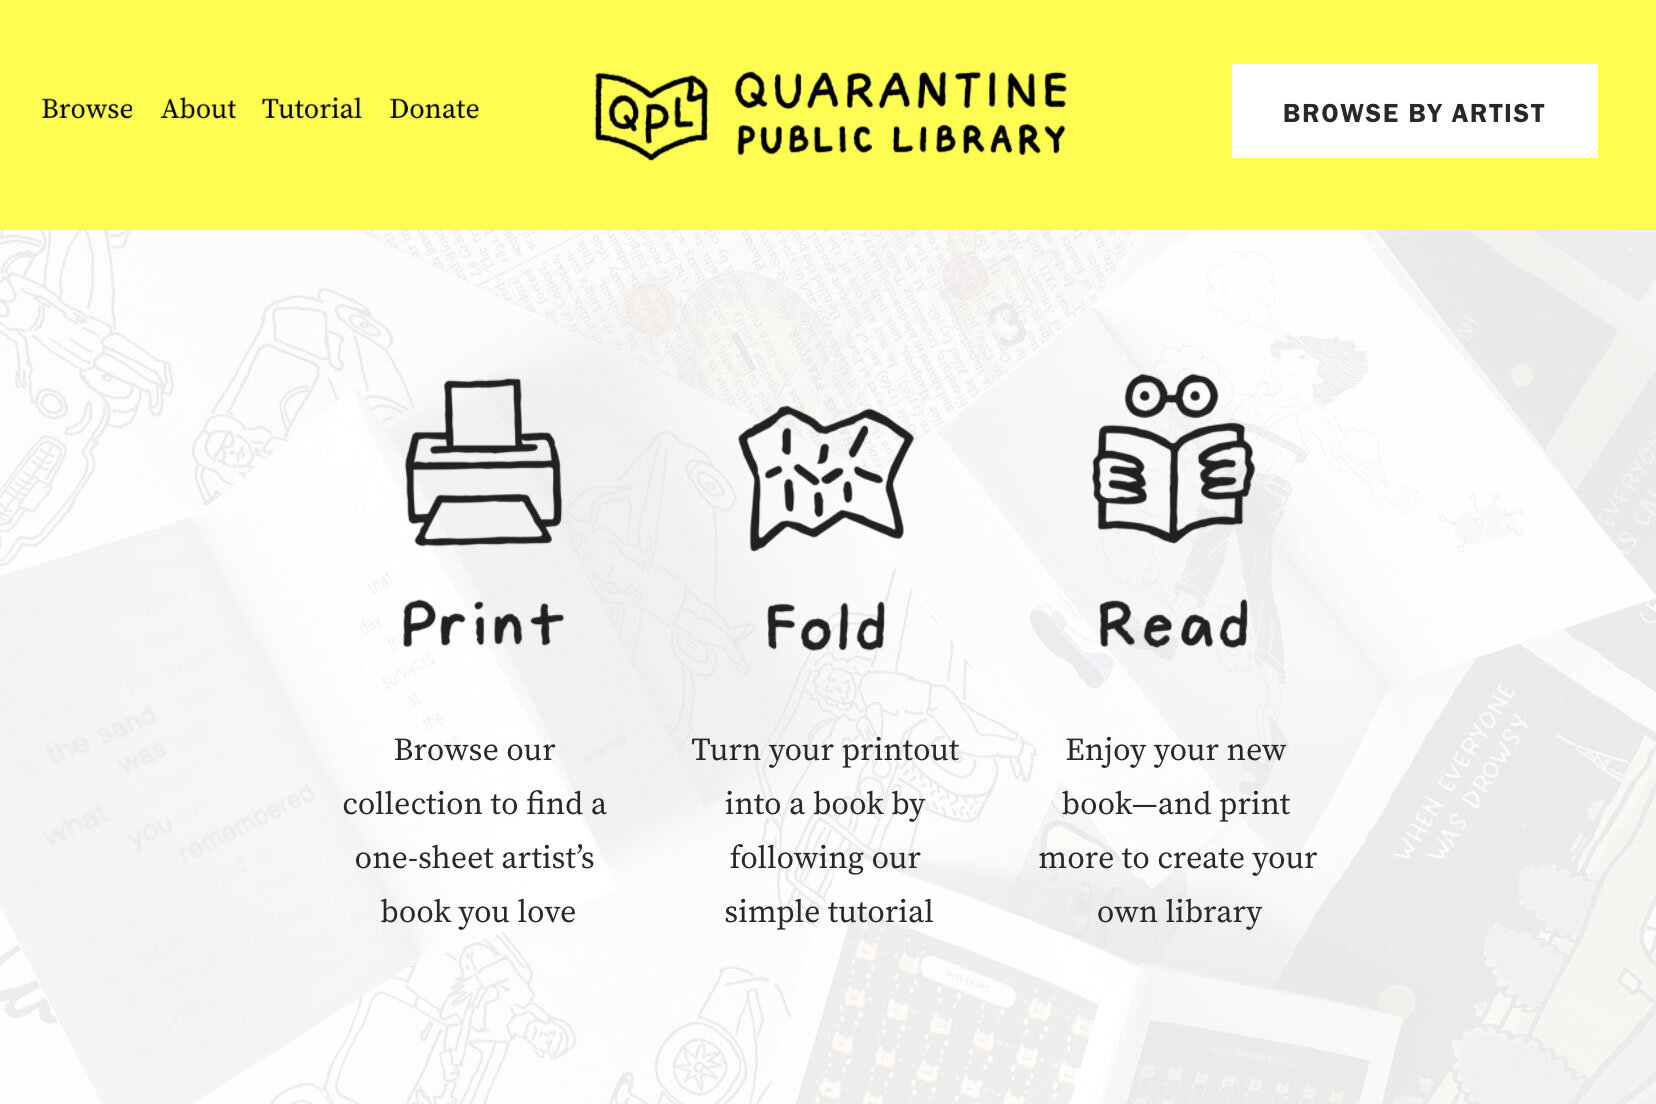 The Quarantine Public Library website.